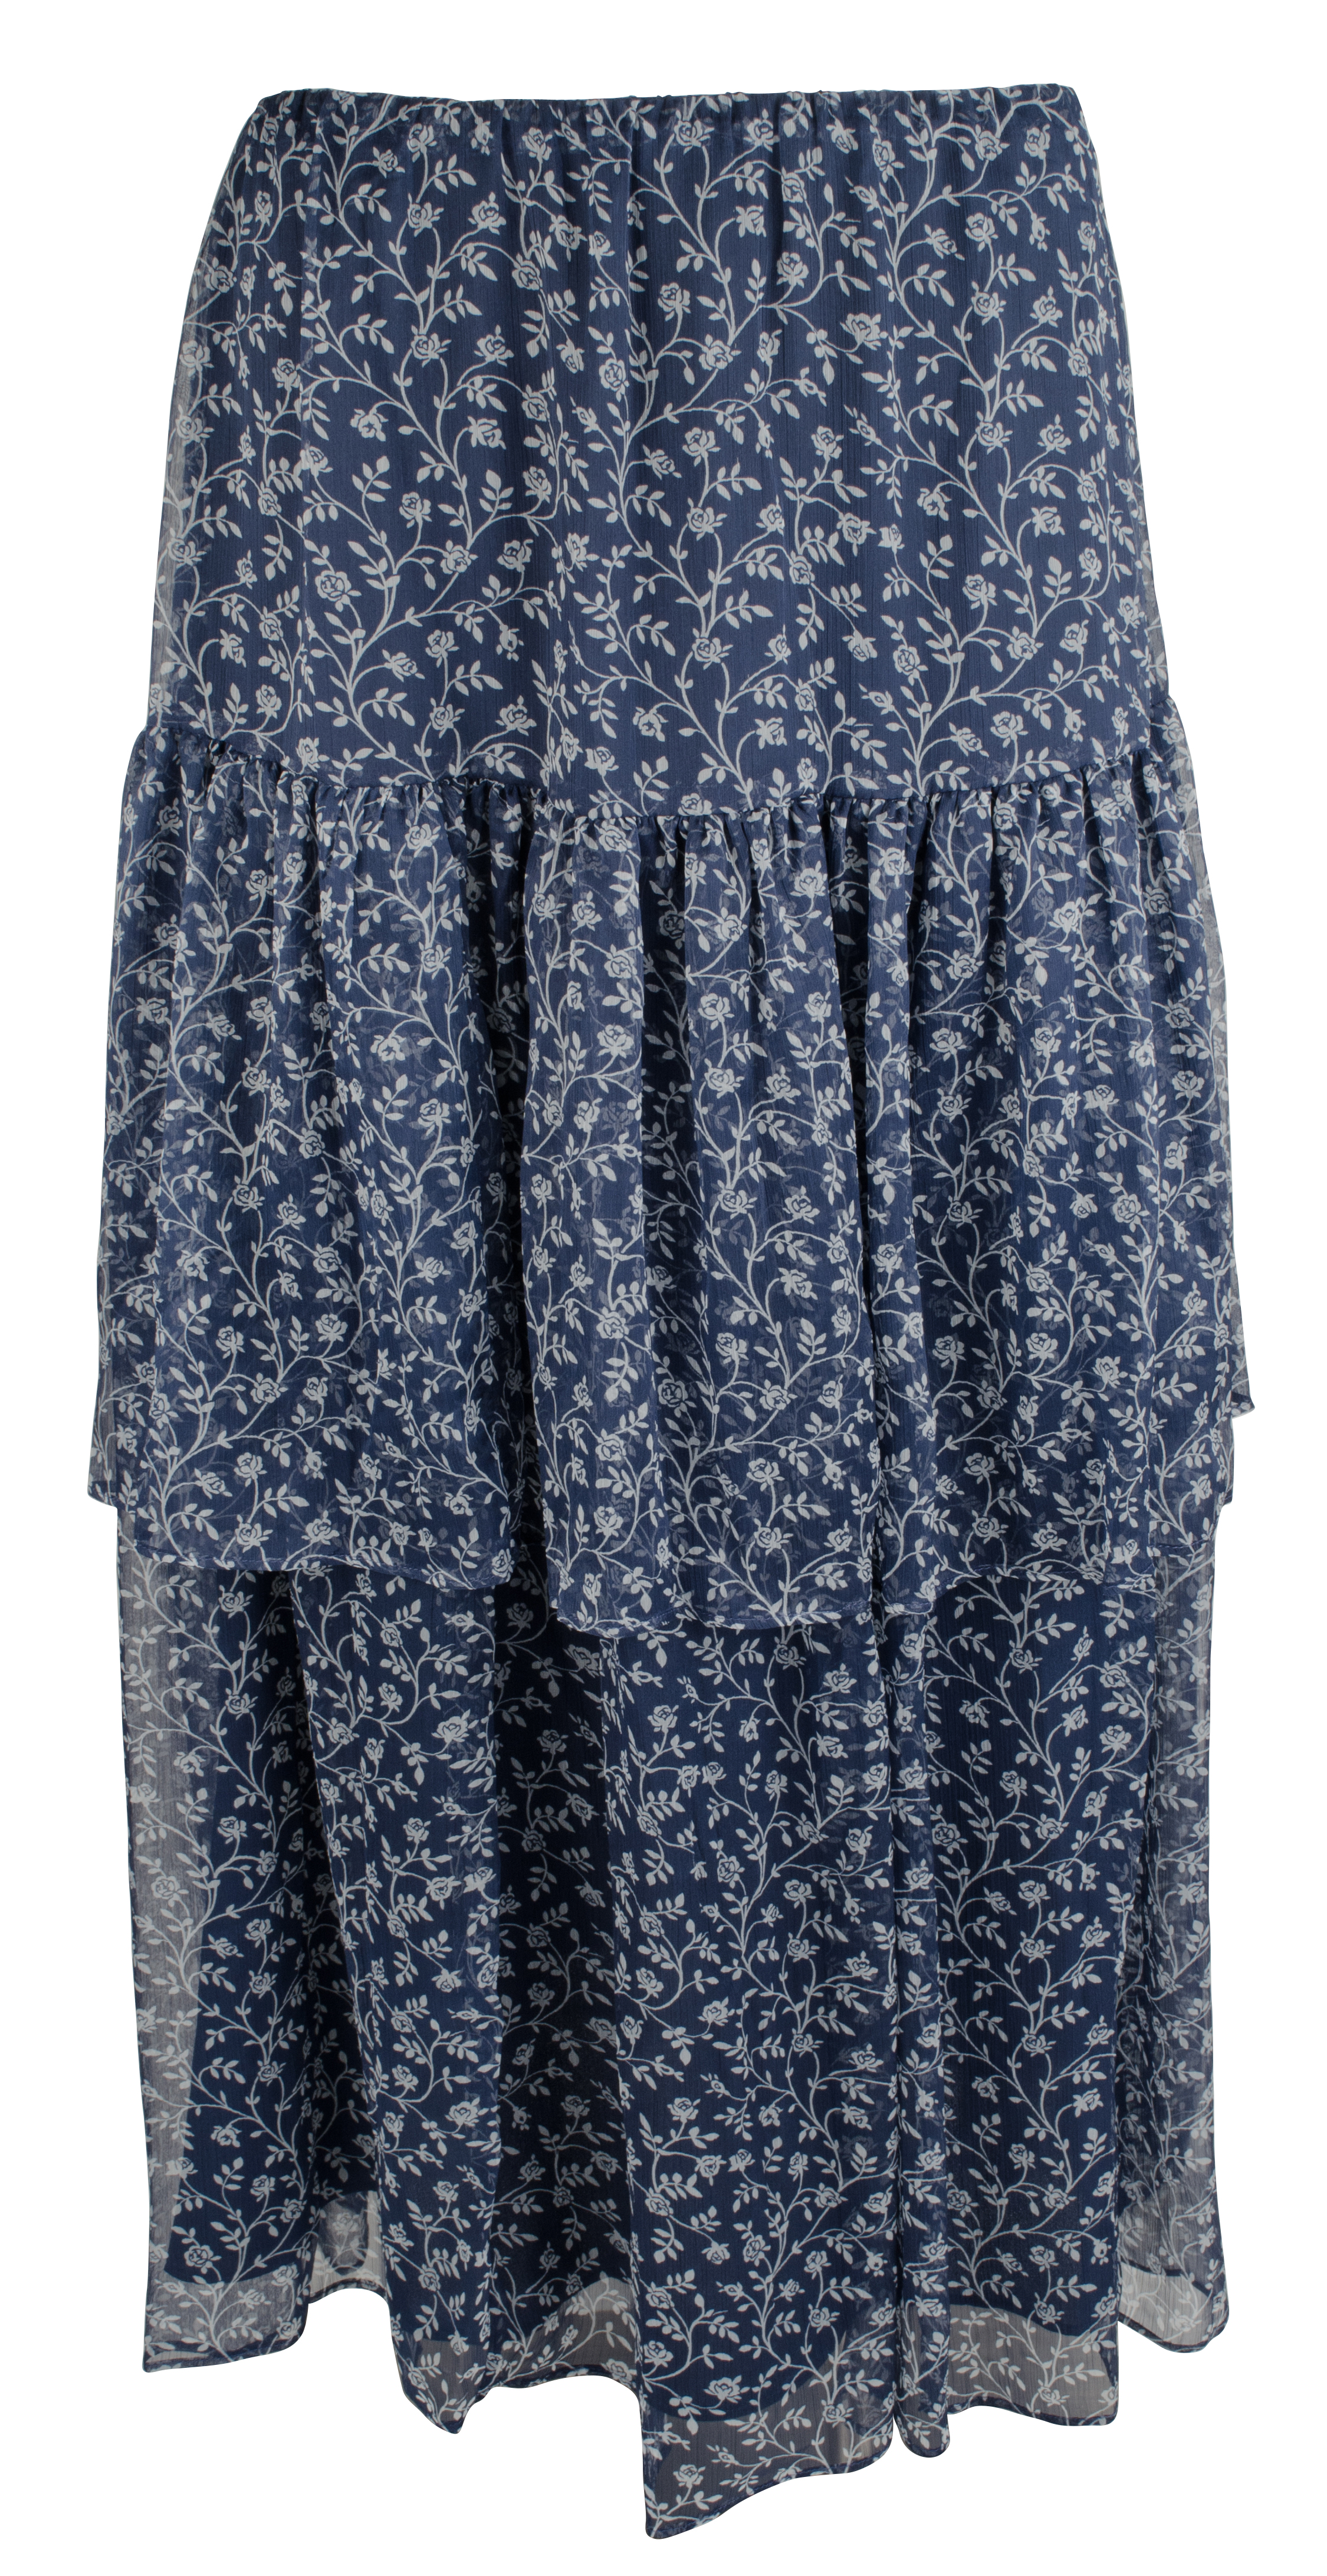 Ralph Lauren Women's Floral-Print Georgette Skirt